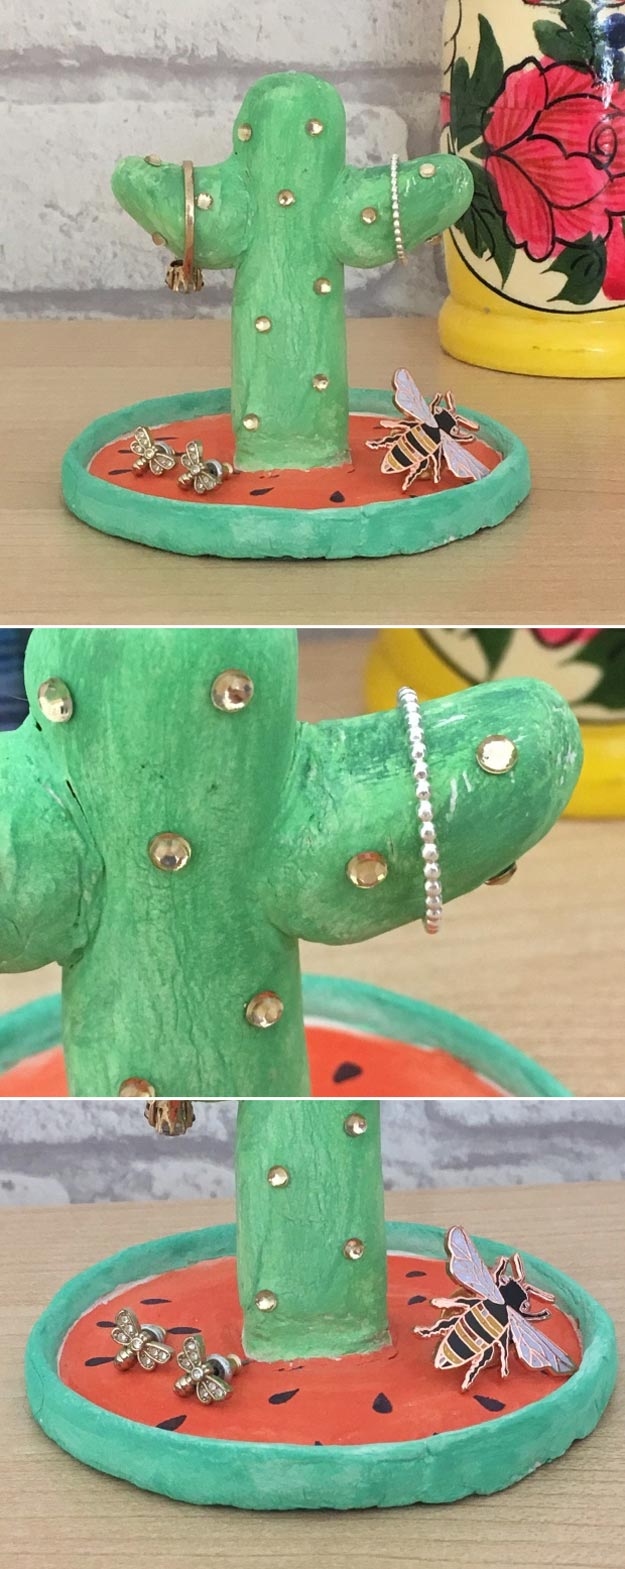 Cactus Party Decor - DIY Cactus Ring Holder - Paper Cactus Crafts - Outdoor Cactus Decorations - DIY Crafts for Room Decor - Homemade Craft Ideas - Cactus Wall - 5 Minute Cactus Crafts #teencrafts #diyideas #cactuscrafts